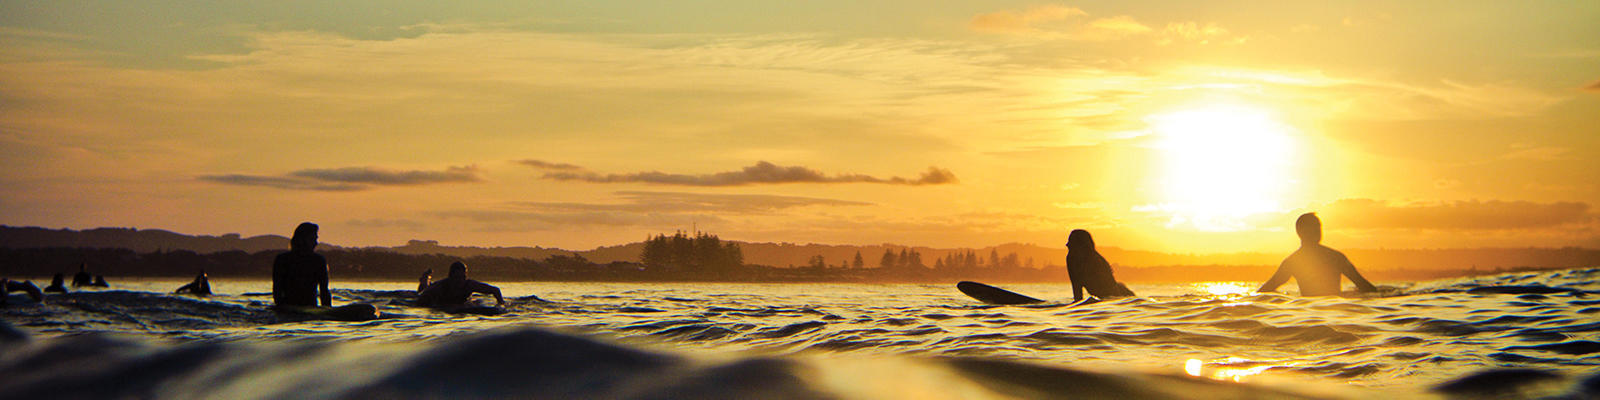 byron bay surfers at sunrise